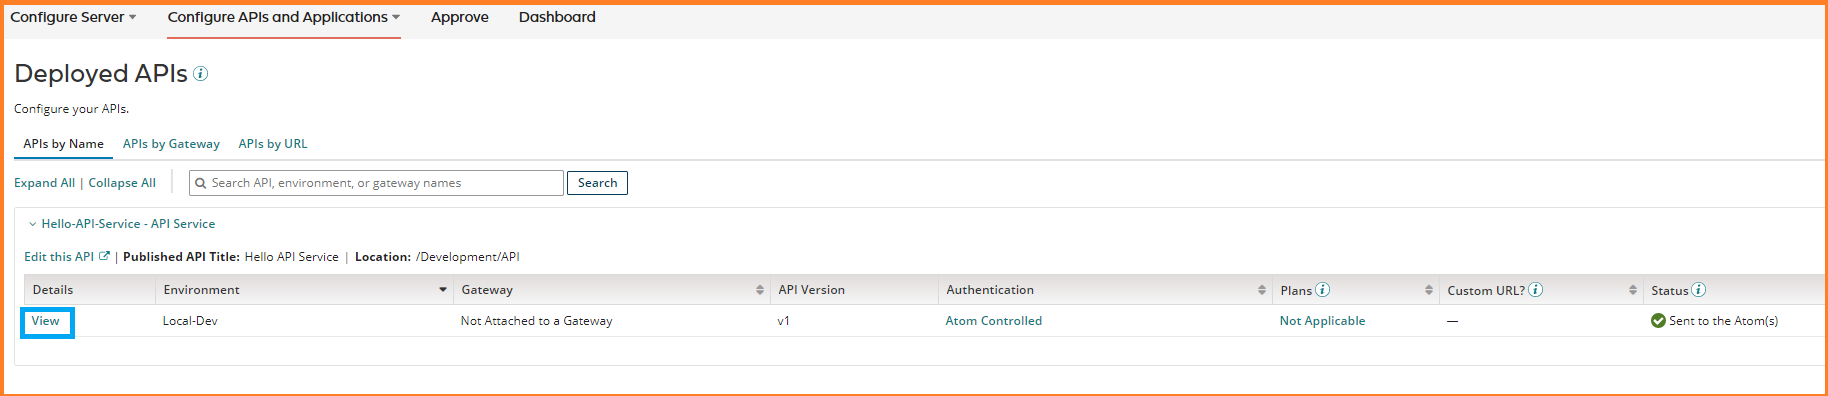 Dell Boomi API Management - Expose RESTful Service - Screenshot 22